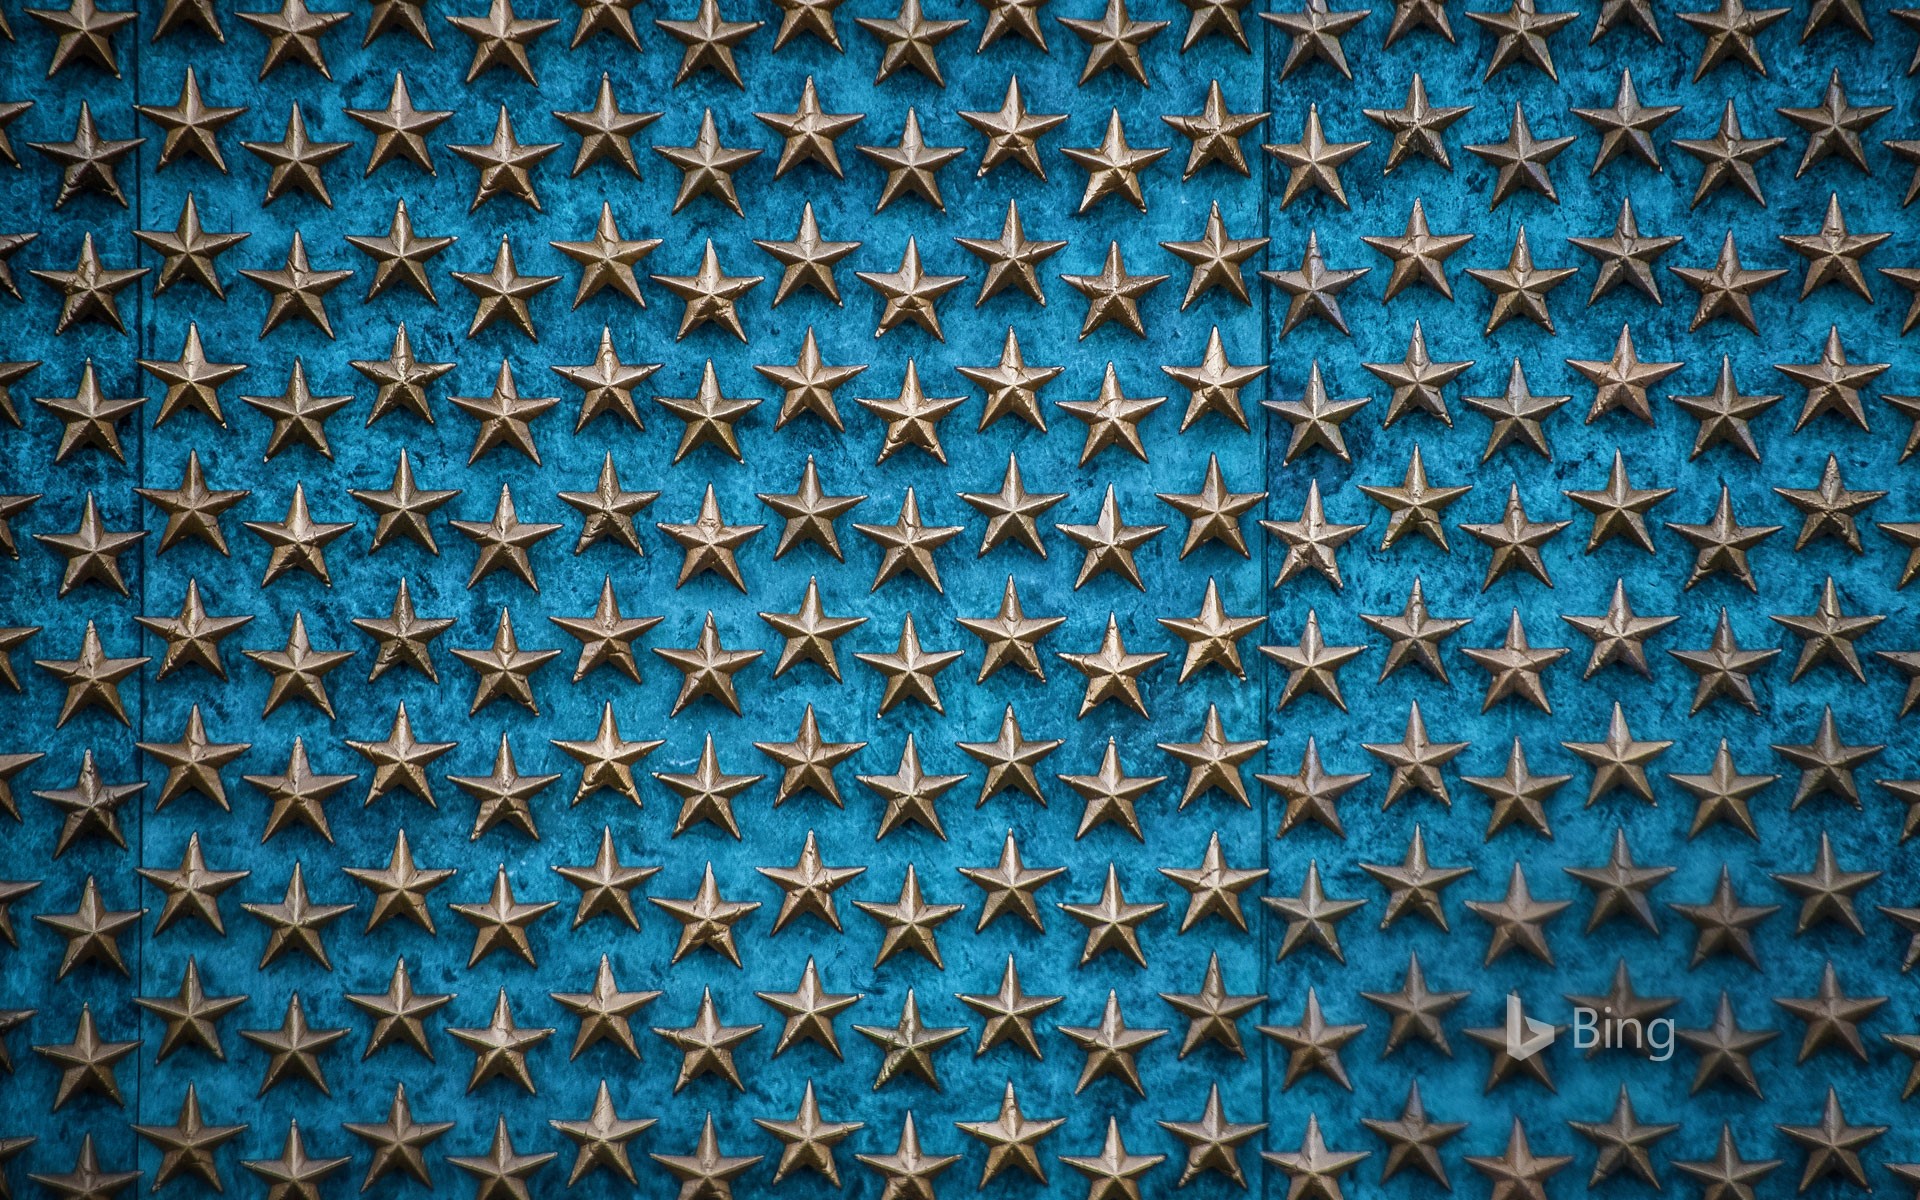 The Freedom Wall at the World War II Memorial in Washington, DC